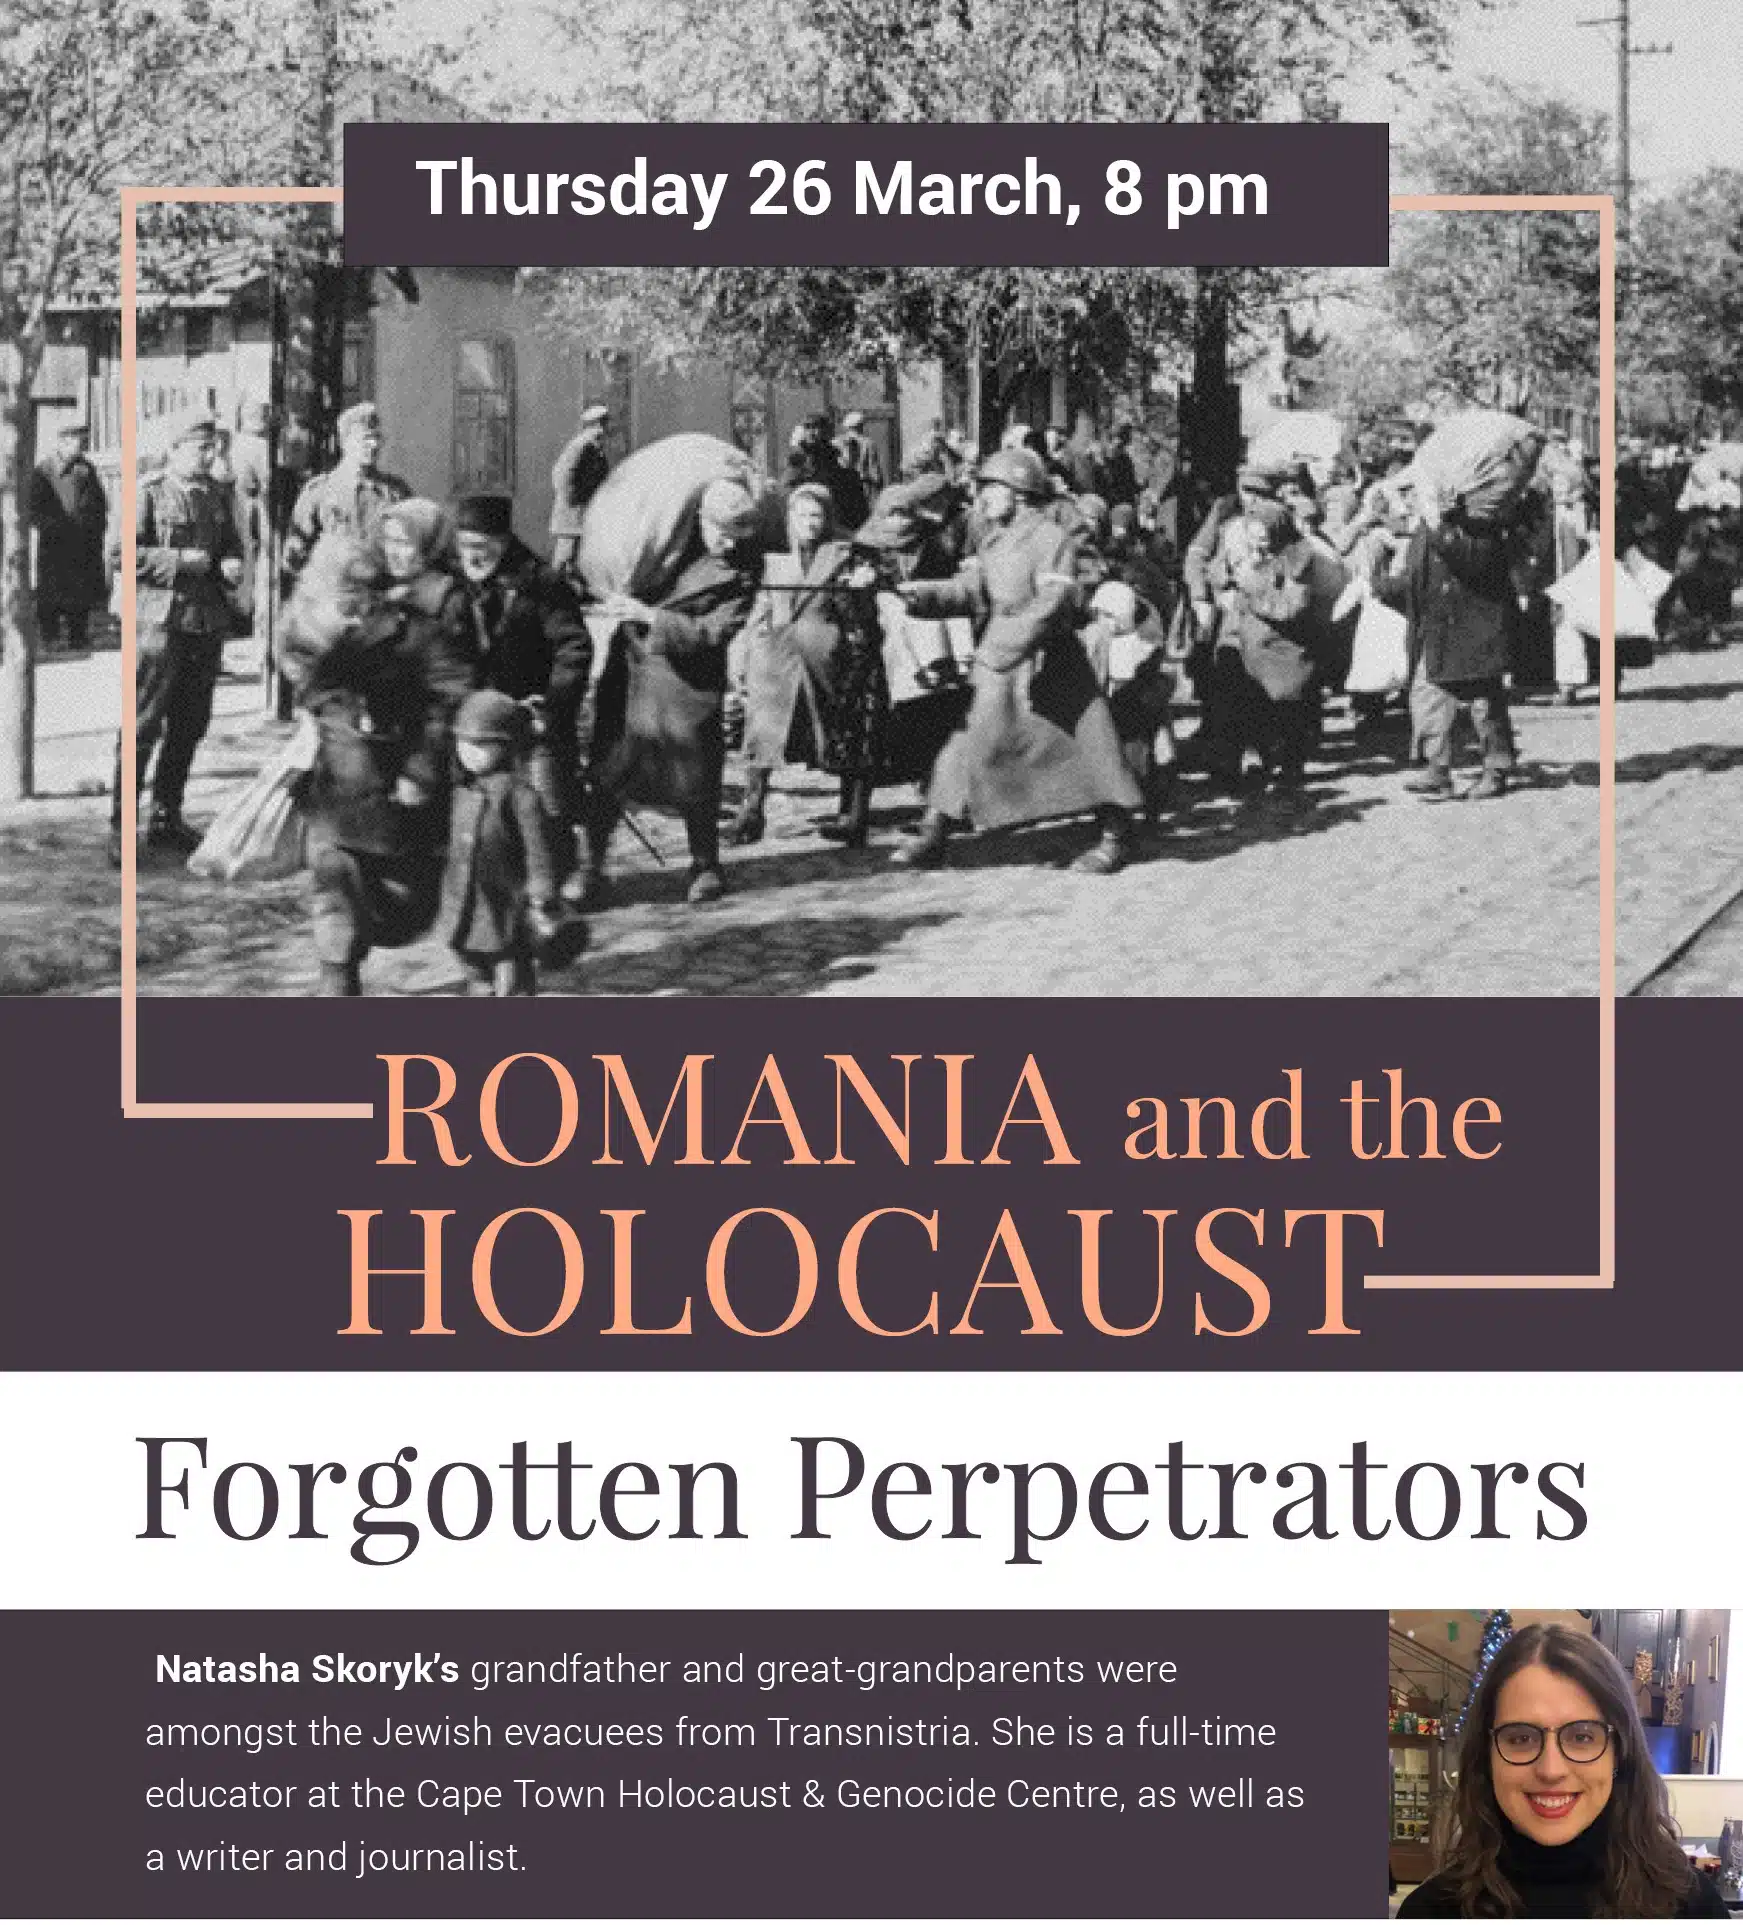 Natasha_Skoryk-CTHGC-Romania-and-the-Holocaust